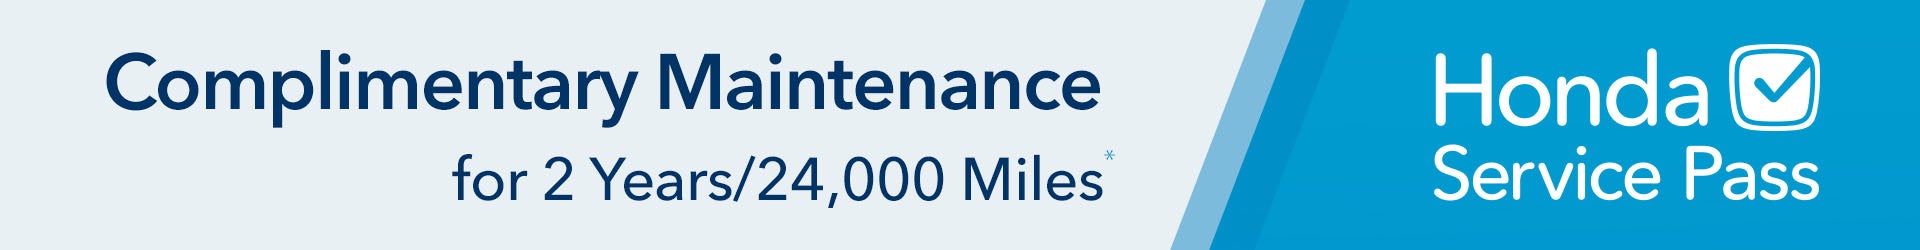 Complimentary Maintenance for 2 years / 24,000 Miles Honda Service Pass | Zanesville Honda in Zanesville OH